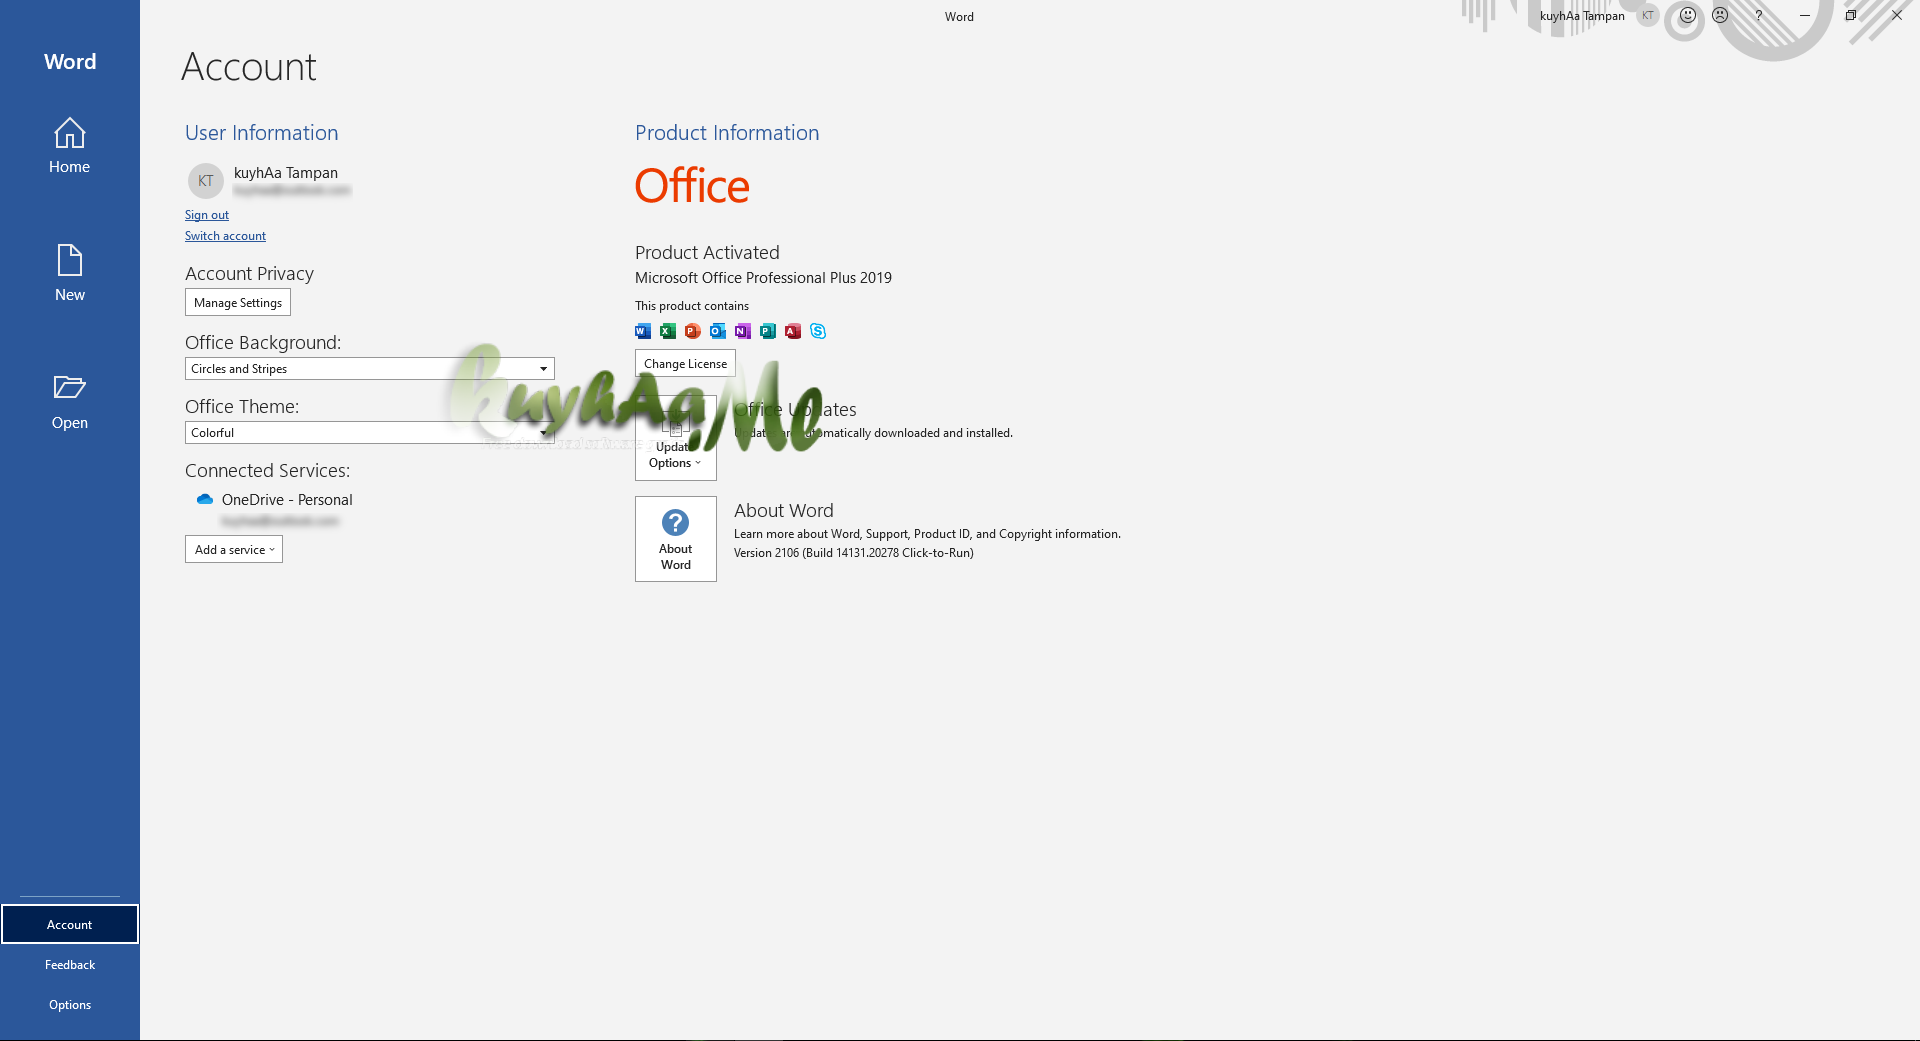 Microsoft Office pro Plus 2019